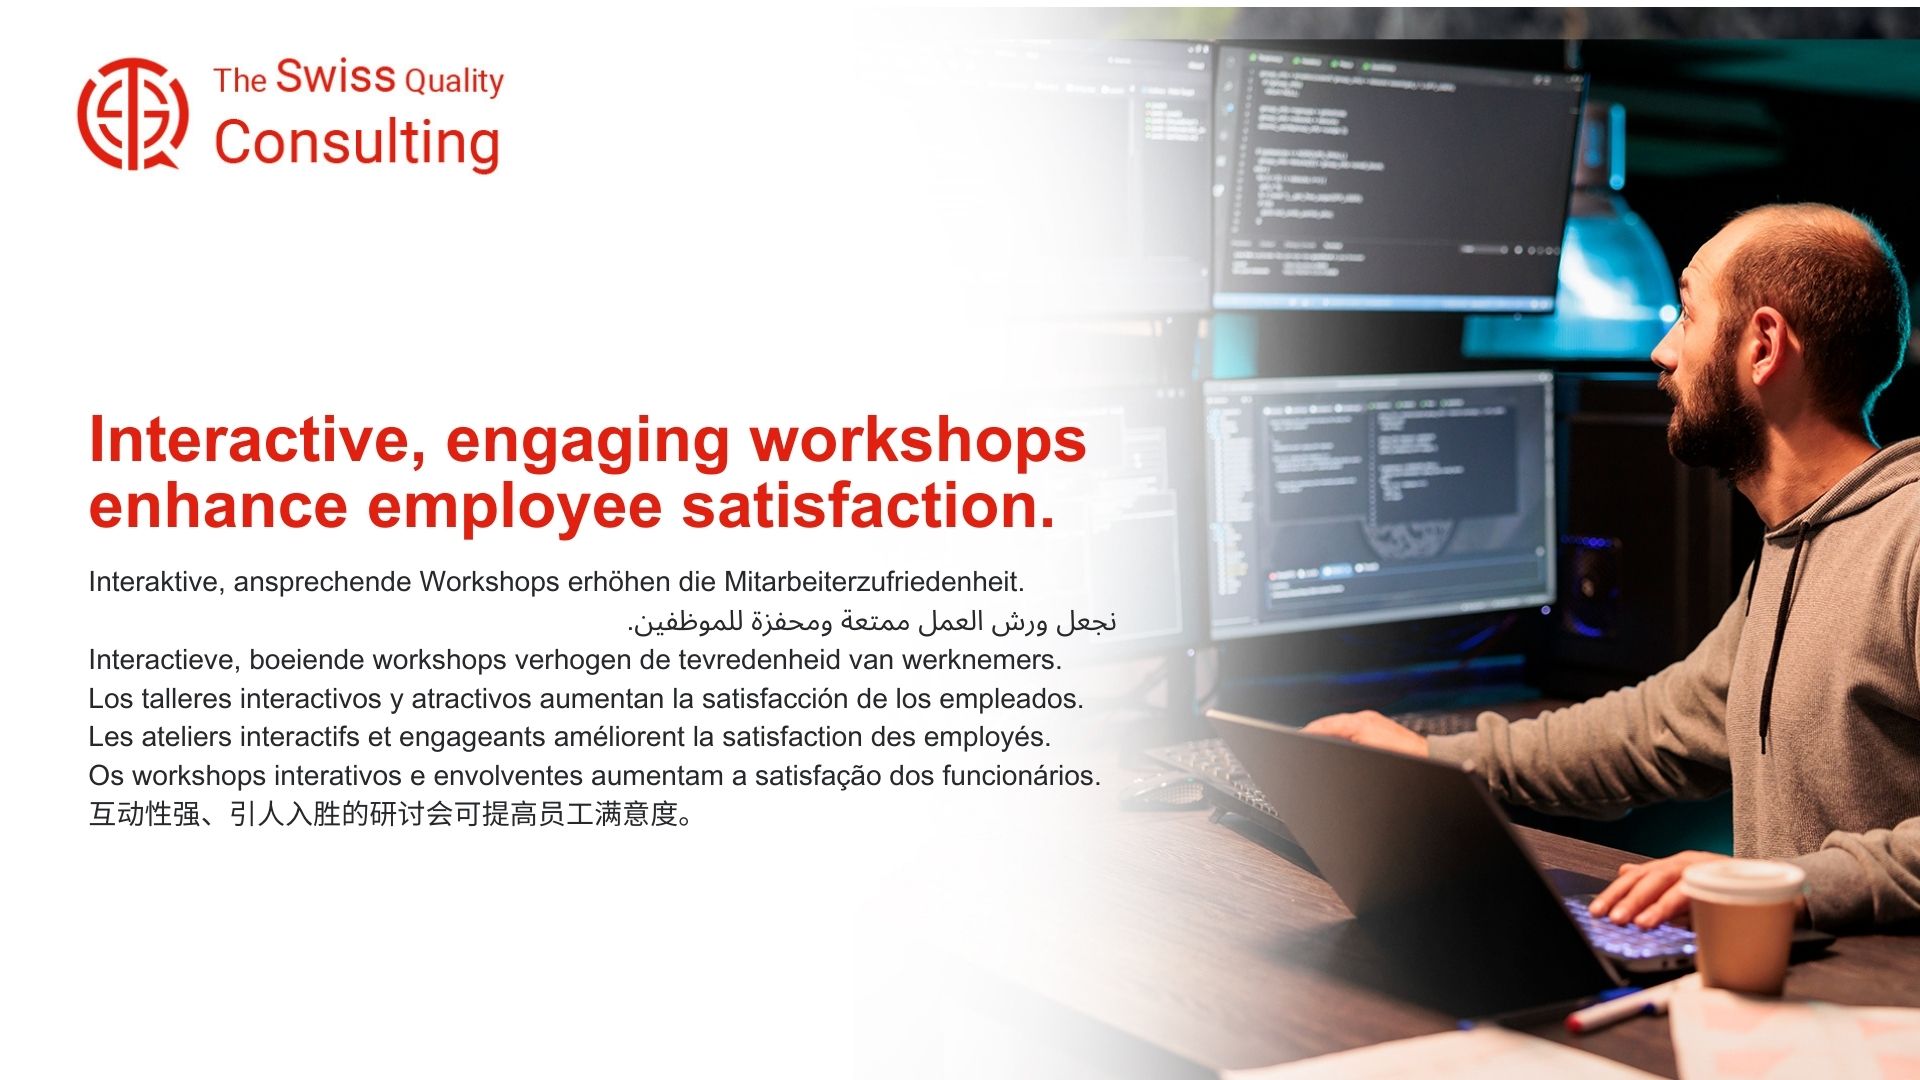 Enhancing Employee Satisfaction Through Interactive Workshops